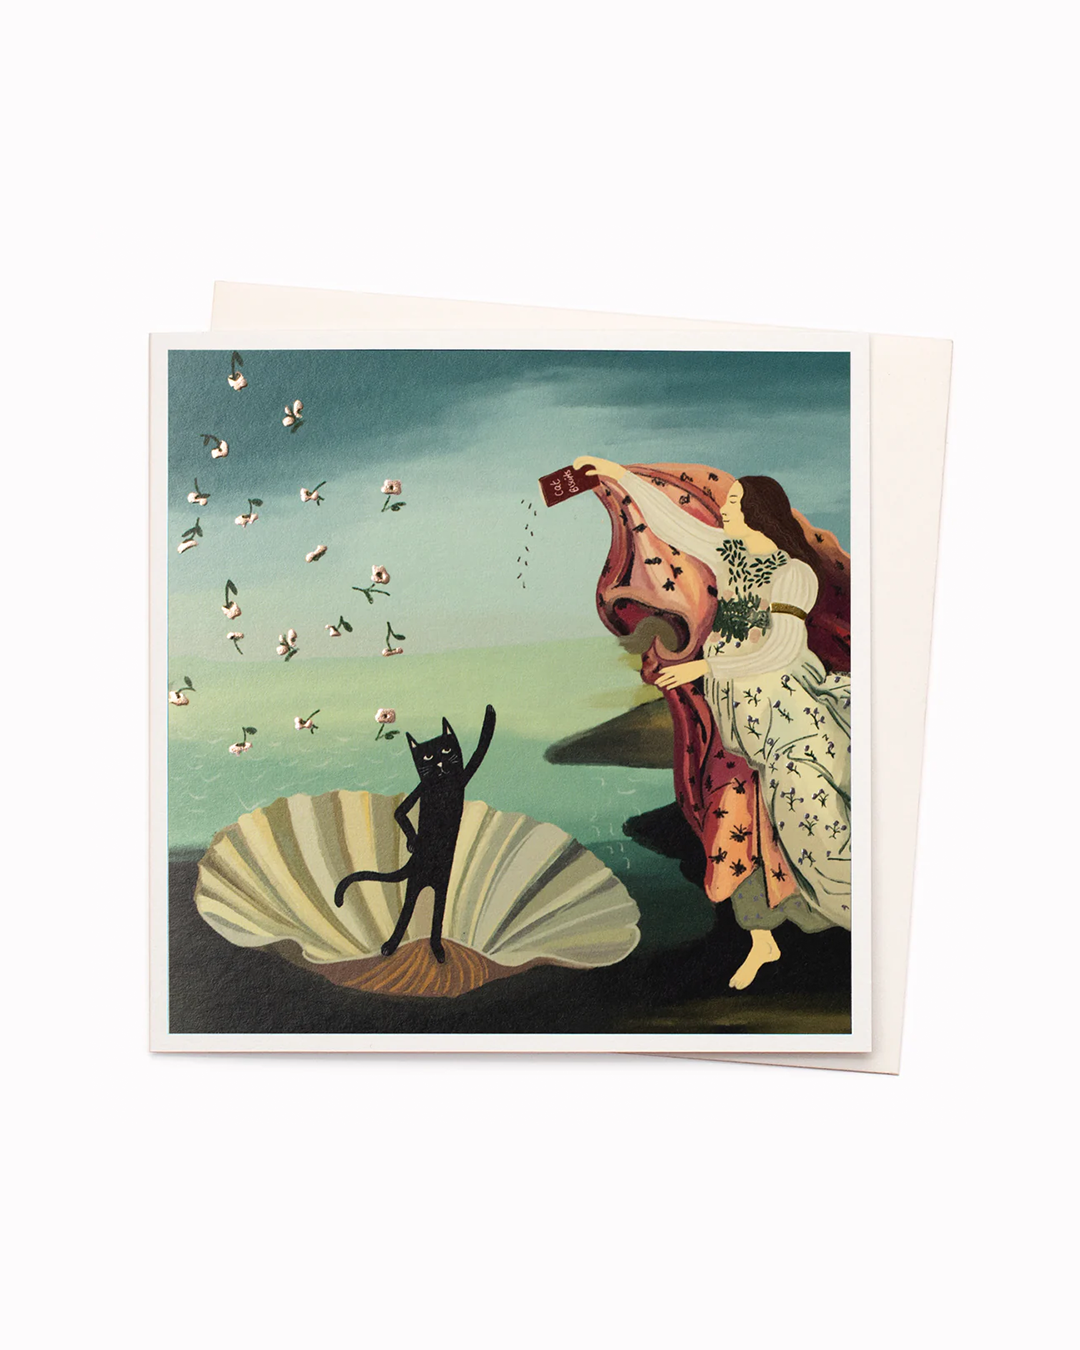 Birth of Venus ✍︎ Art Pun Greeting Card